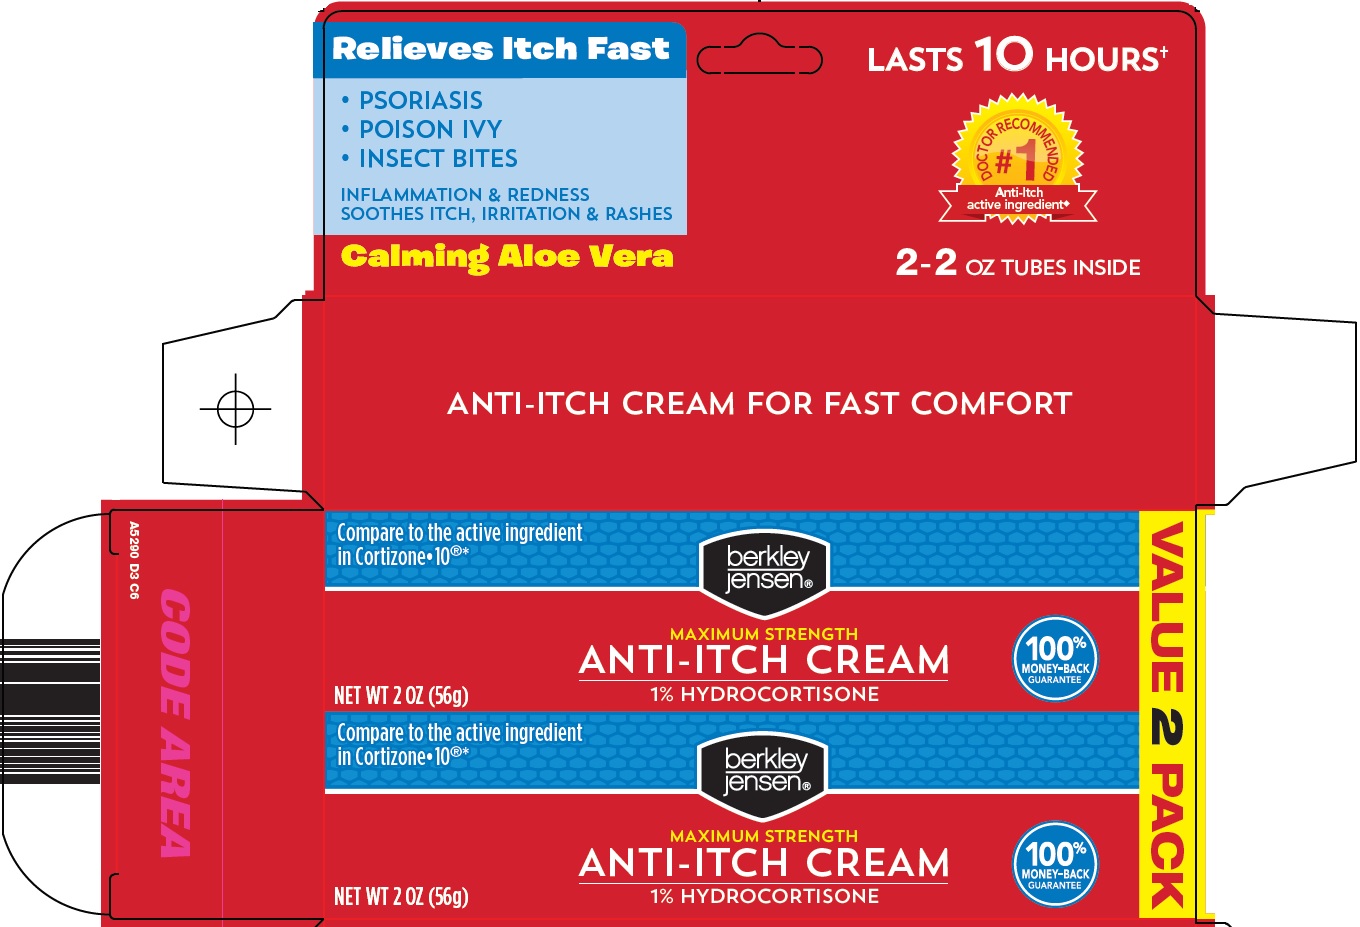 Anti-Itch Cream Carton Image 1